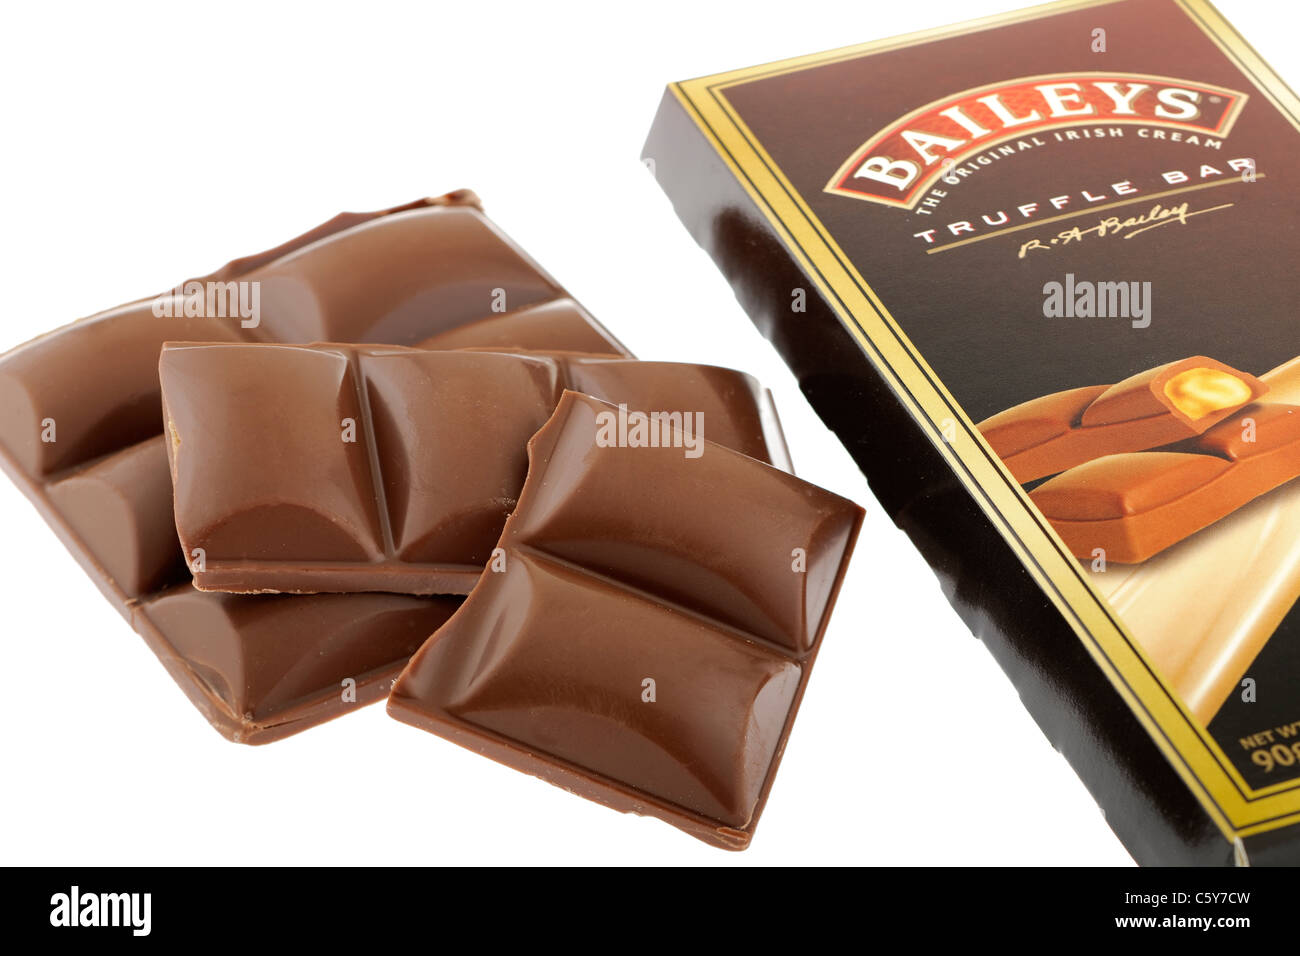 90 gram block of Baileys Truffle filled chocolate bar pieces. Stock Photo